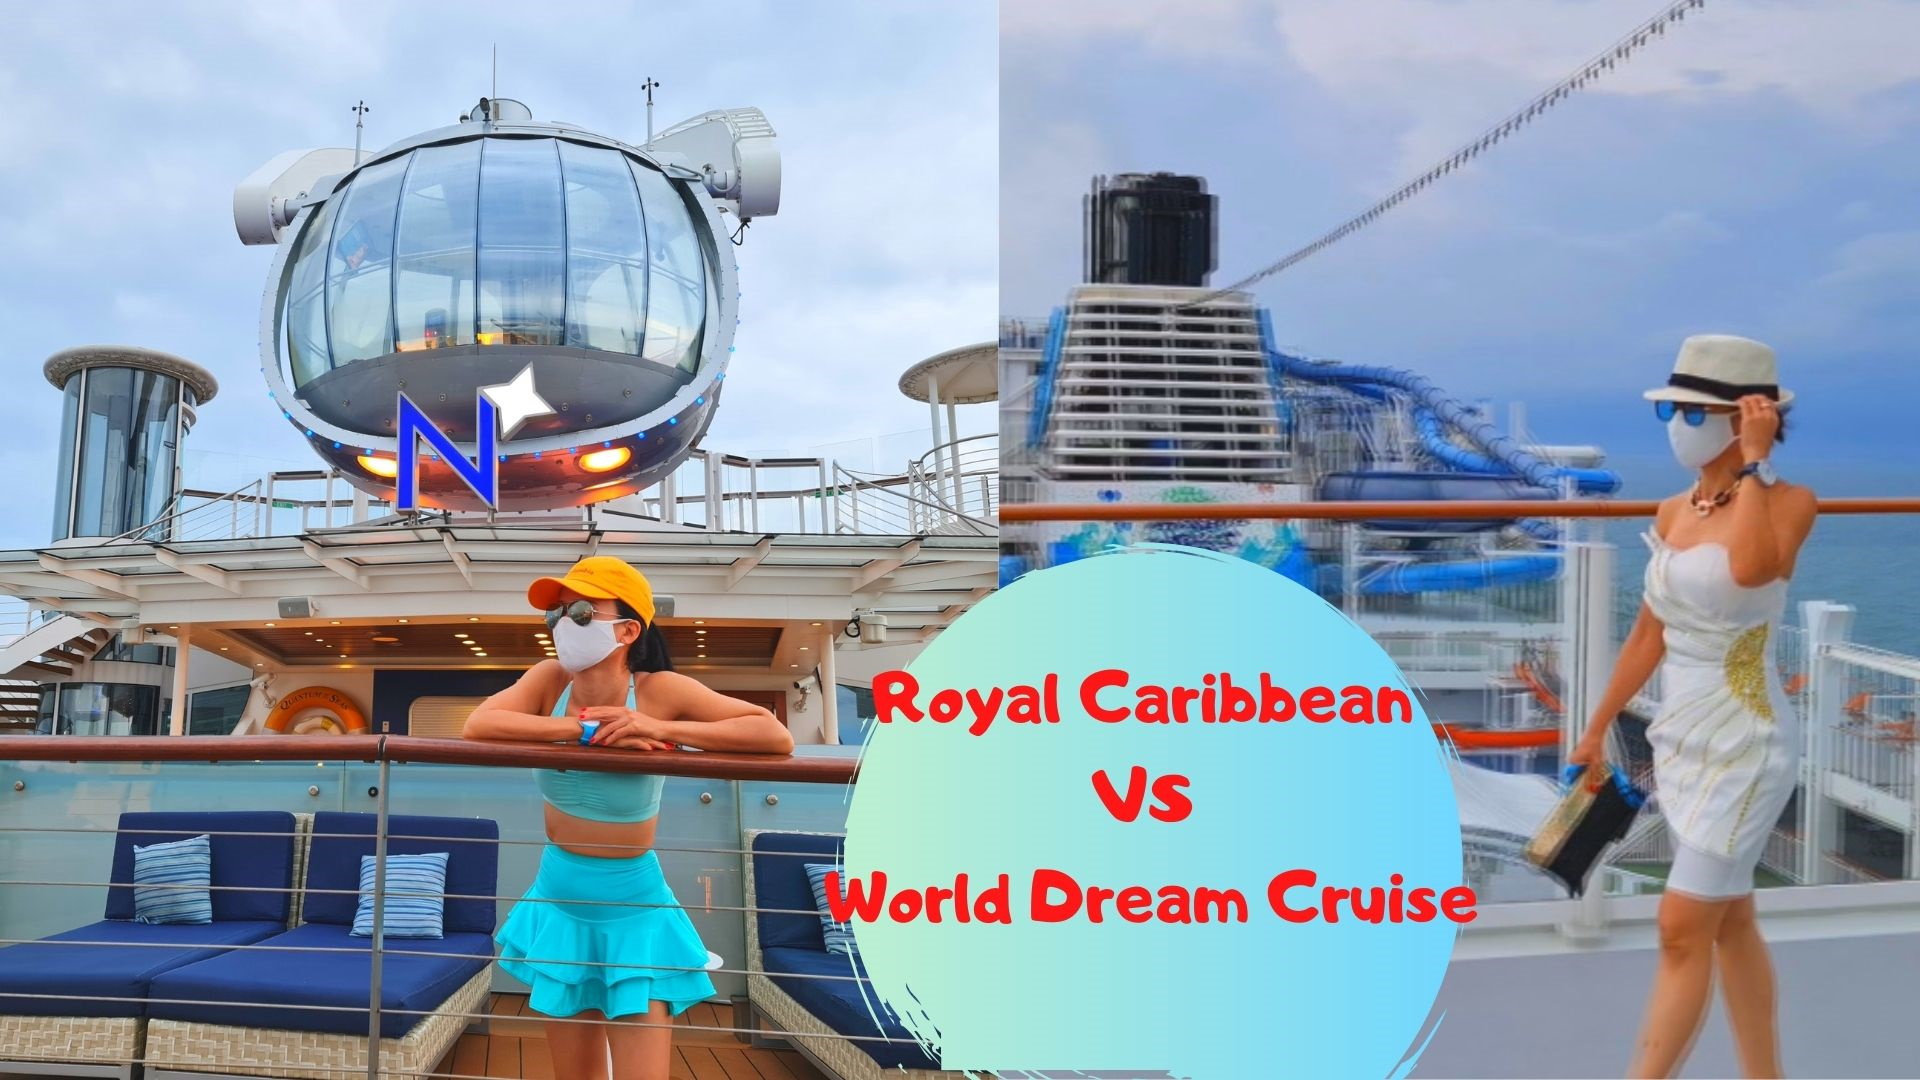 Royal Caribbean (Quantum of the Seas) vs World Dream Cruise – Cruise to Nowhere